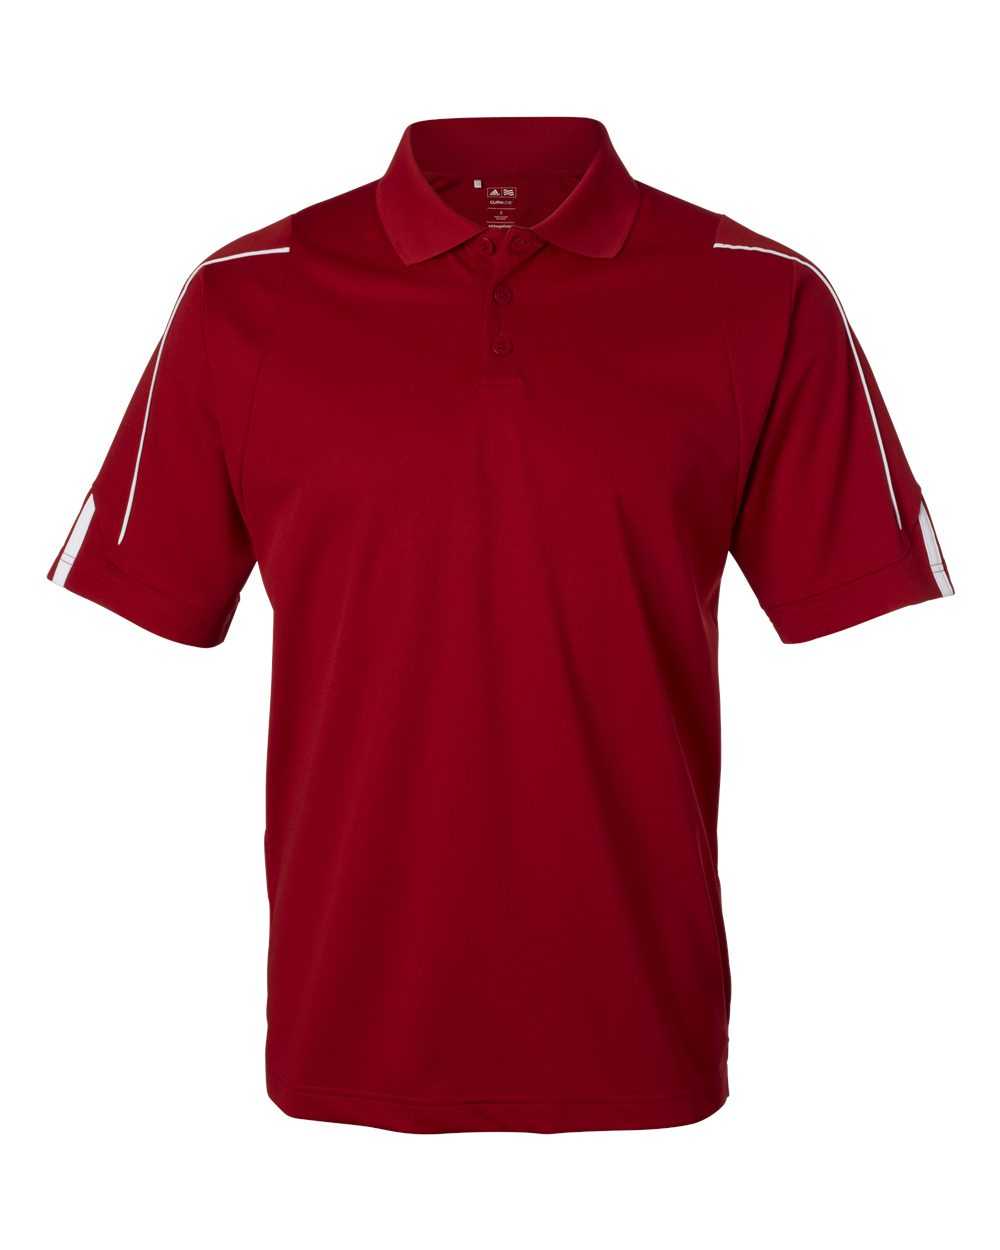 Adidas A76 3-Stripes Cuff Sport Shirt - Power RedWhite - HIT a Double